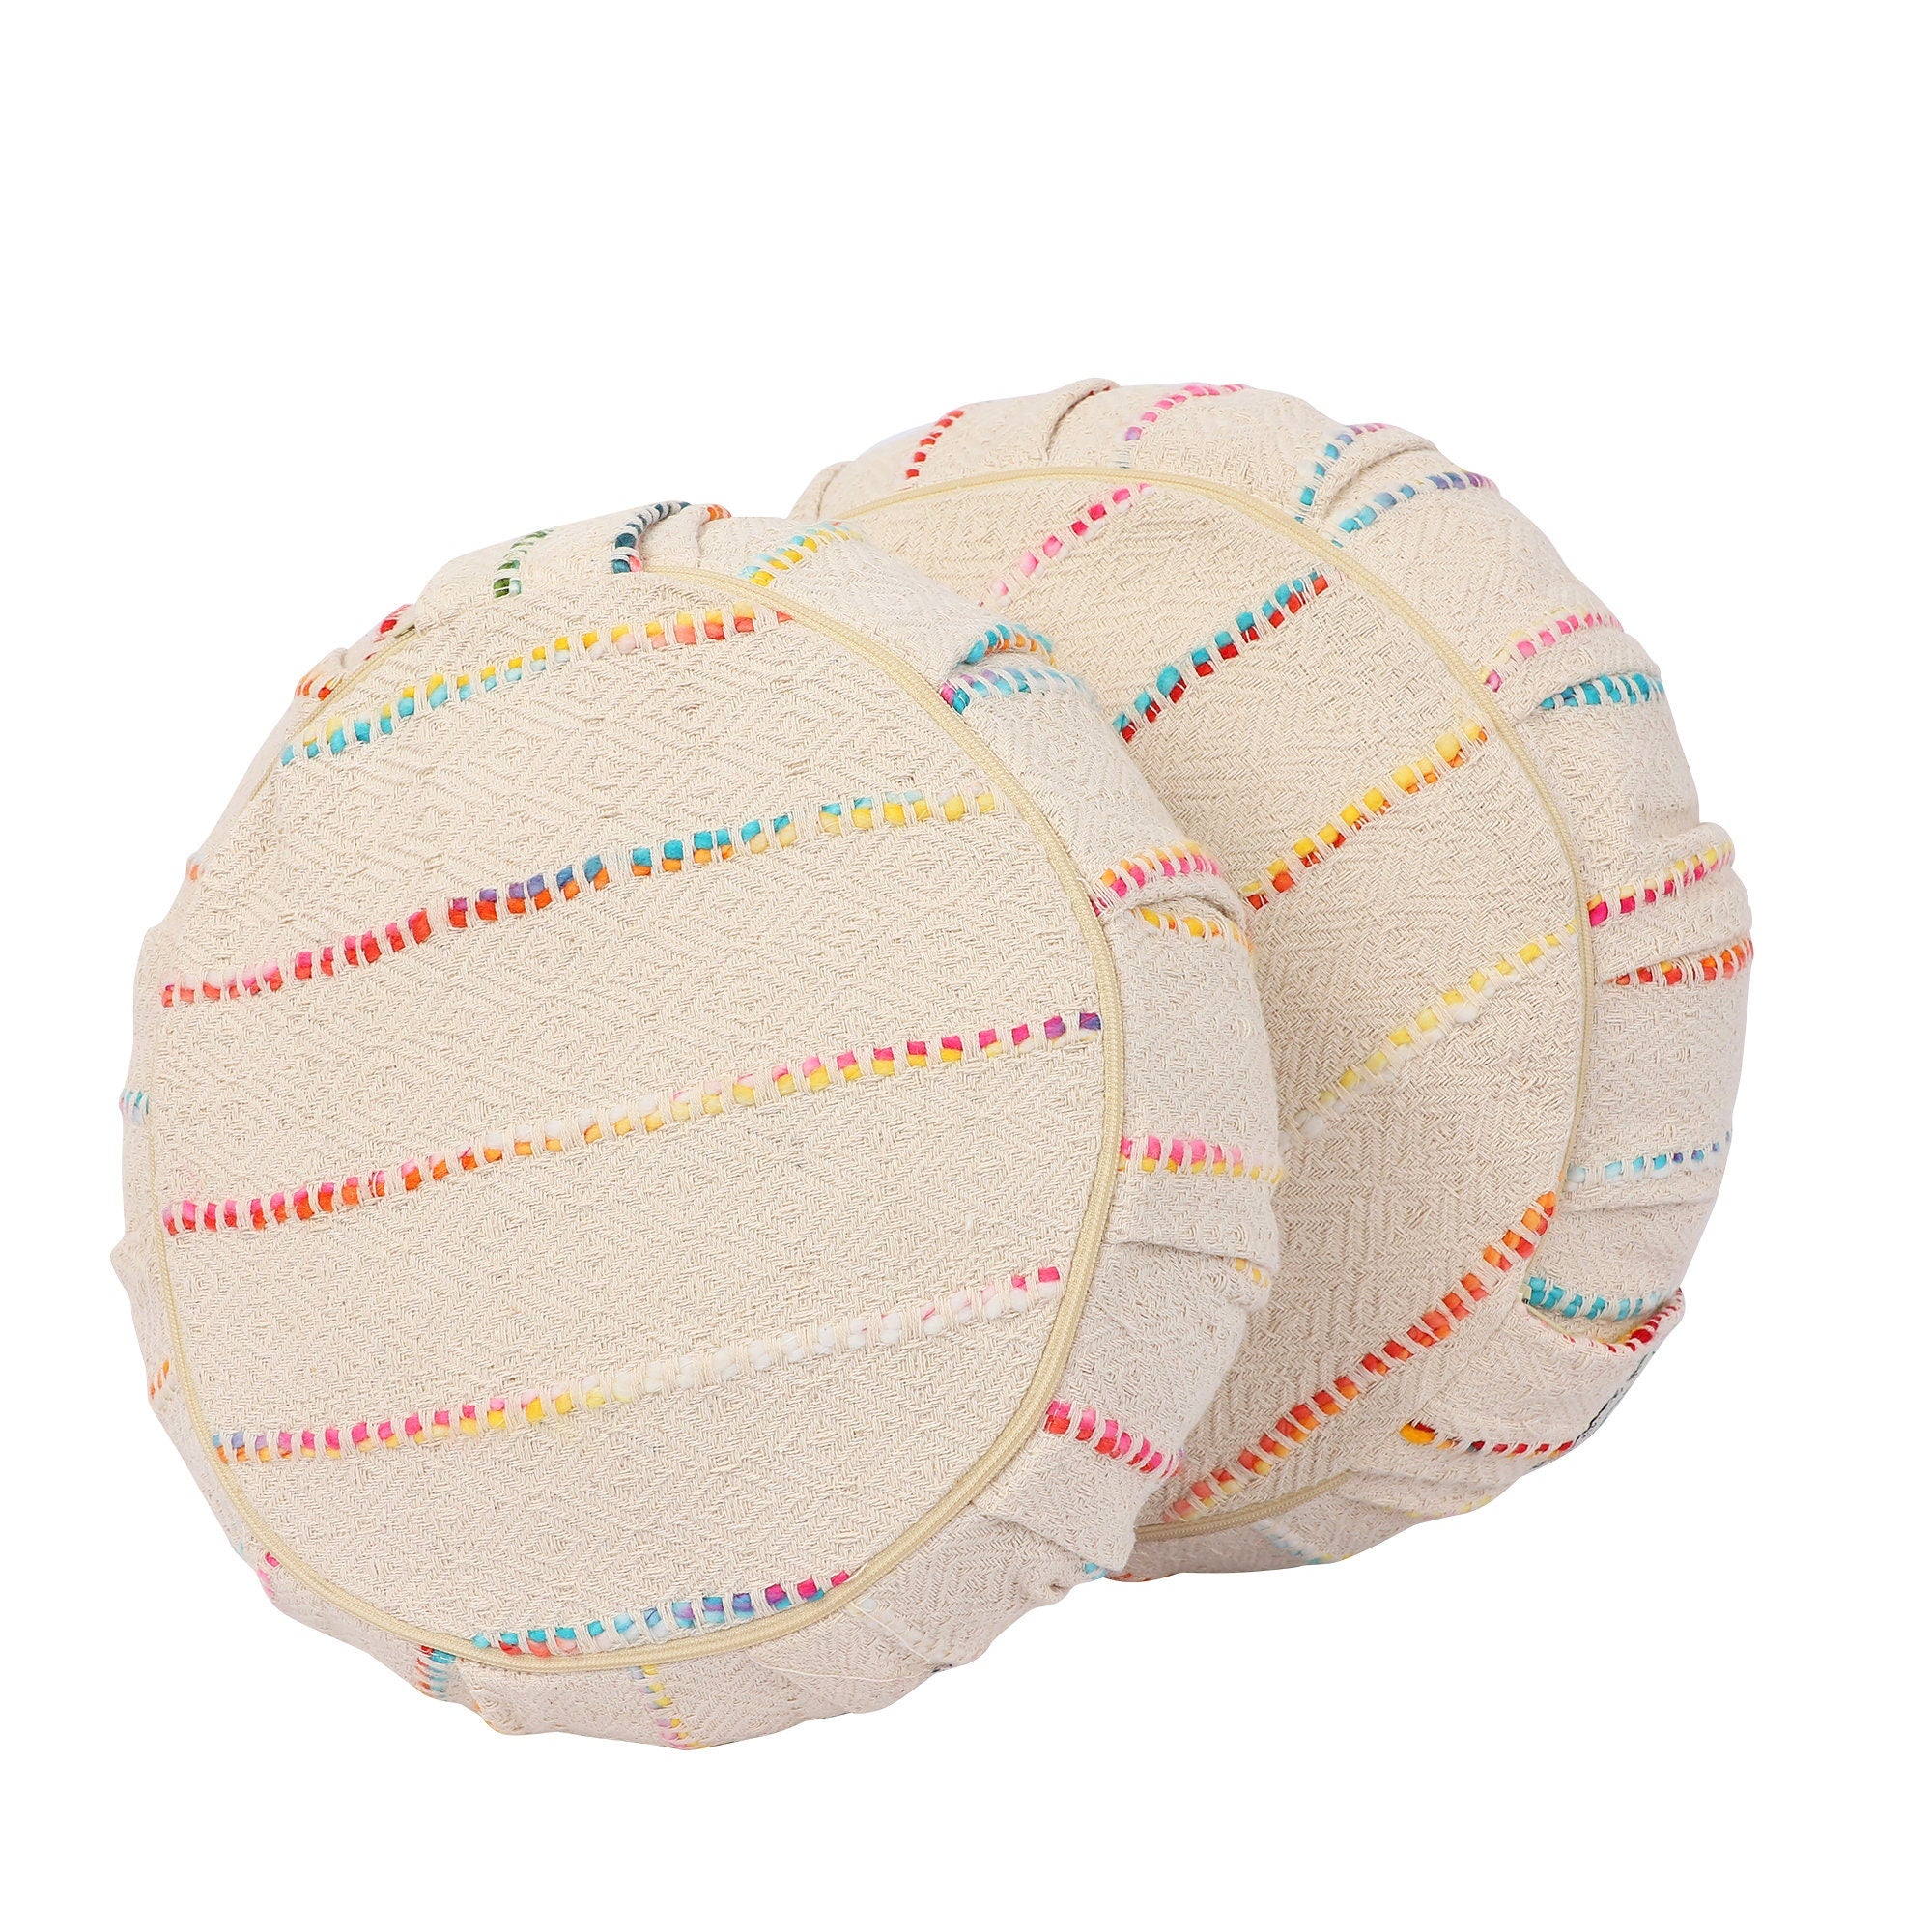 Yoga Meditation Cushion | Handwoven Handmade Round Zafu Pillow  |Zipped Cover |Washable| Portable - Marrakesh - Filling Options